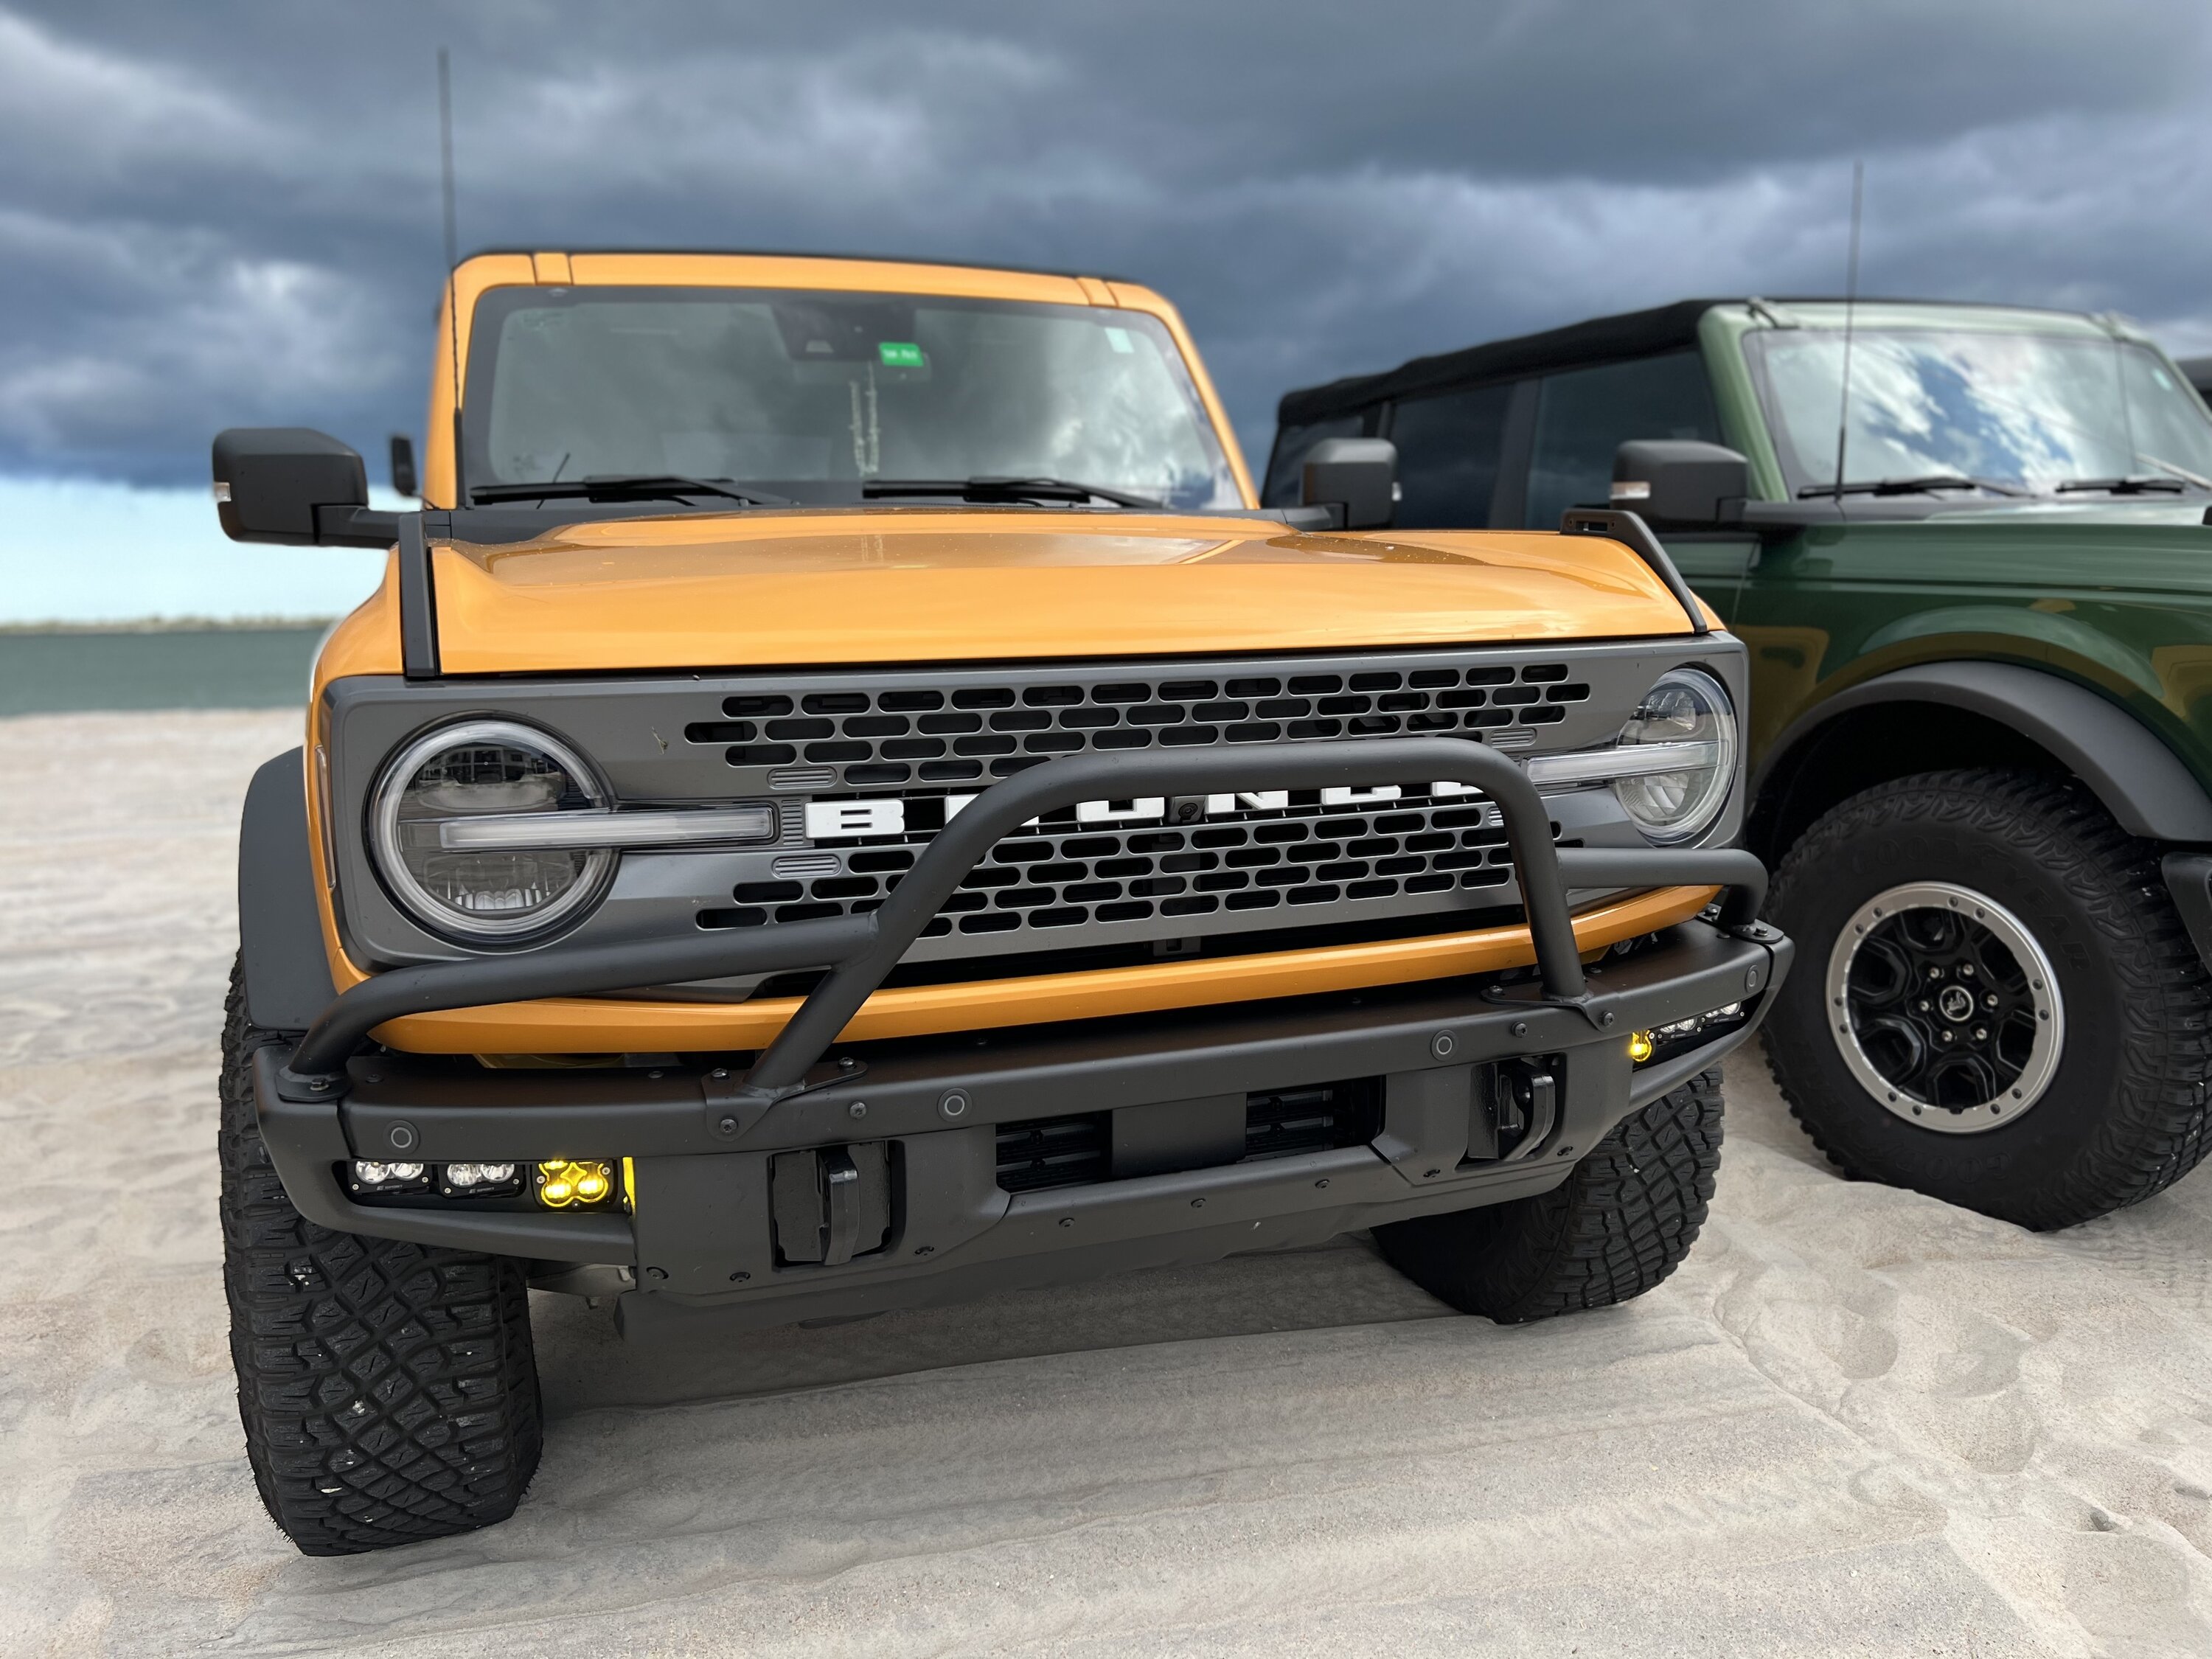 Ford Bronco Weird Request - Eruption Green & Cyber Orange side-by-side pics? DSZ_9826_halfsize.JPG